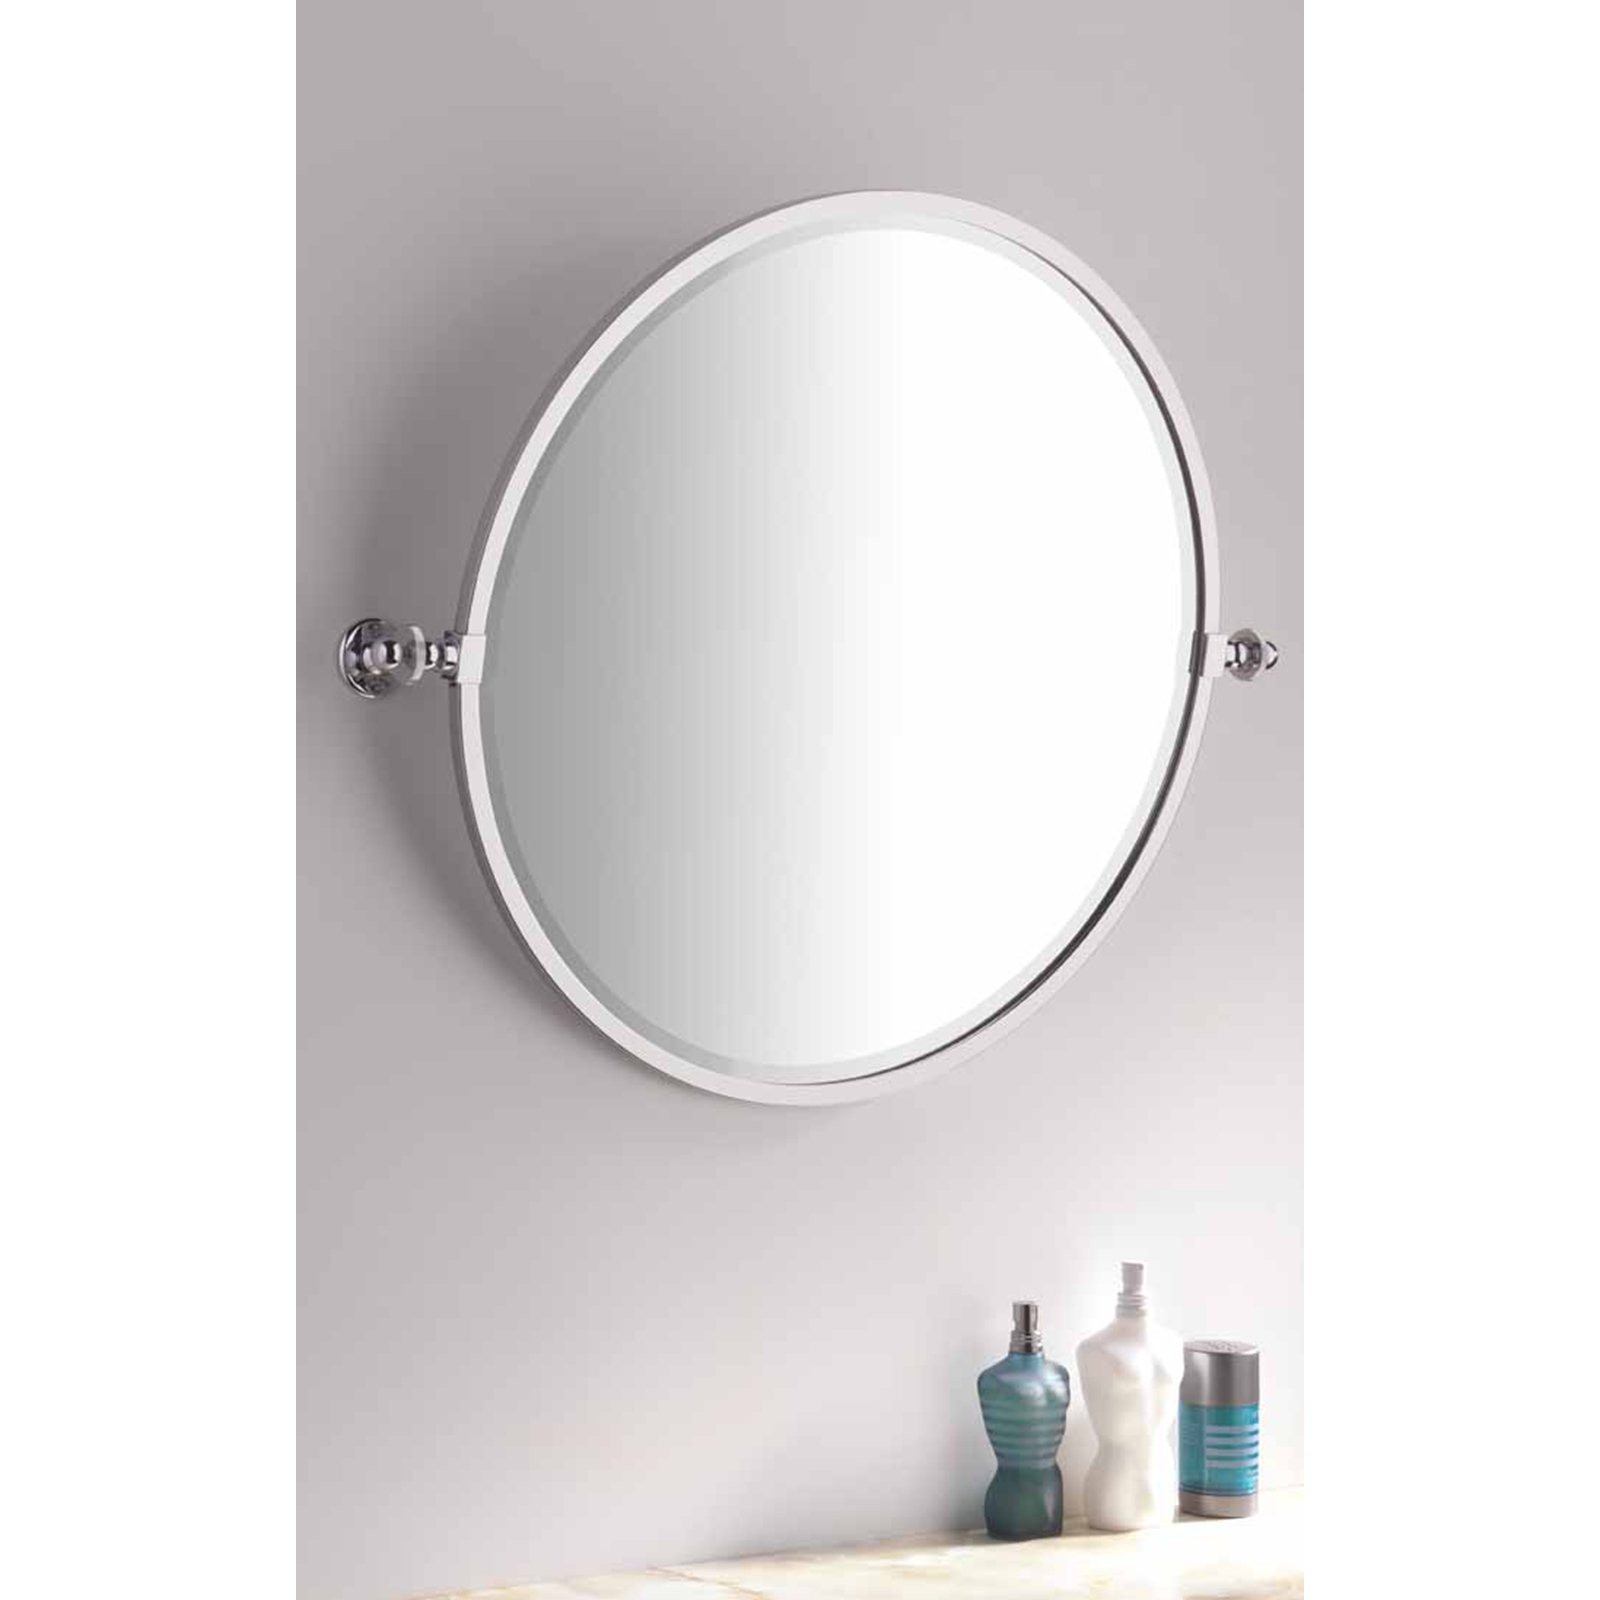 Tilting Bathroom Mirror
 Bathroom Handmade Round Tilting Mirror